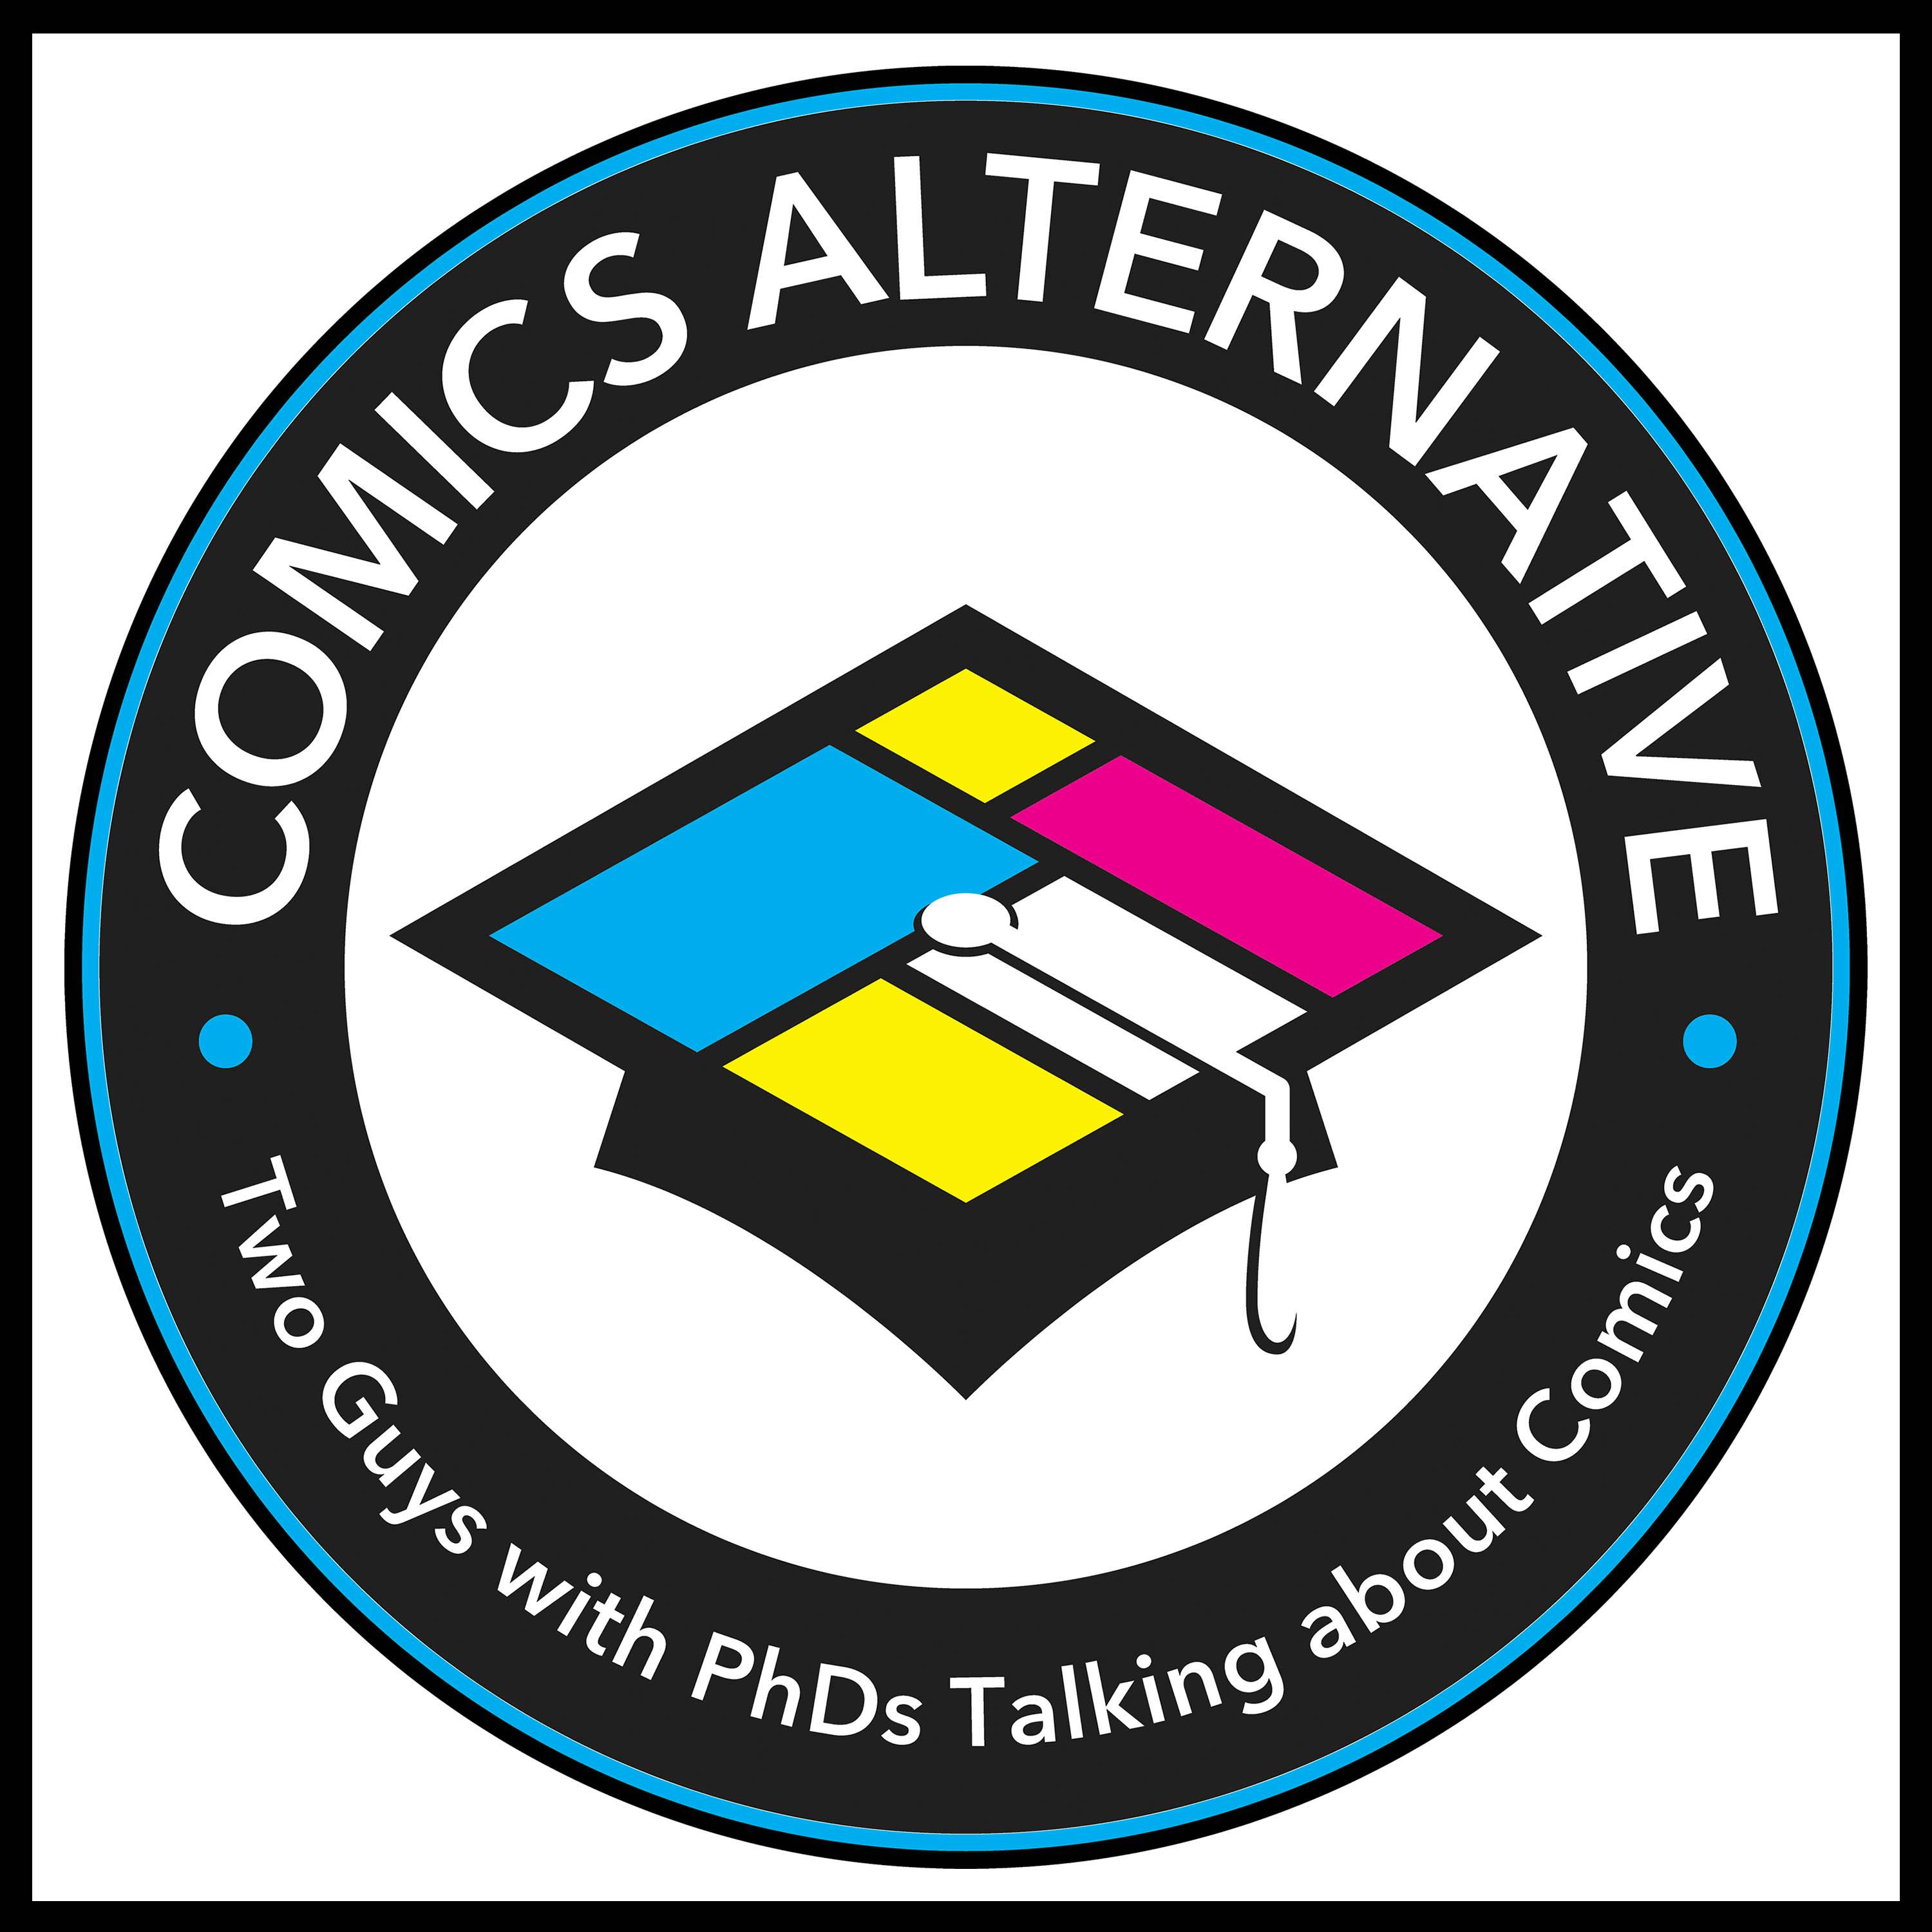 The Comics Alternative